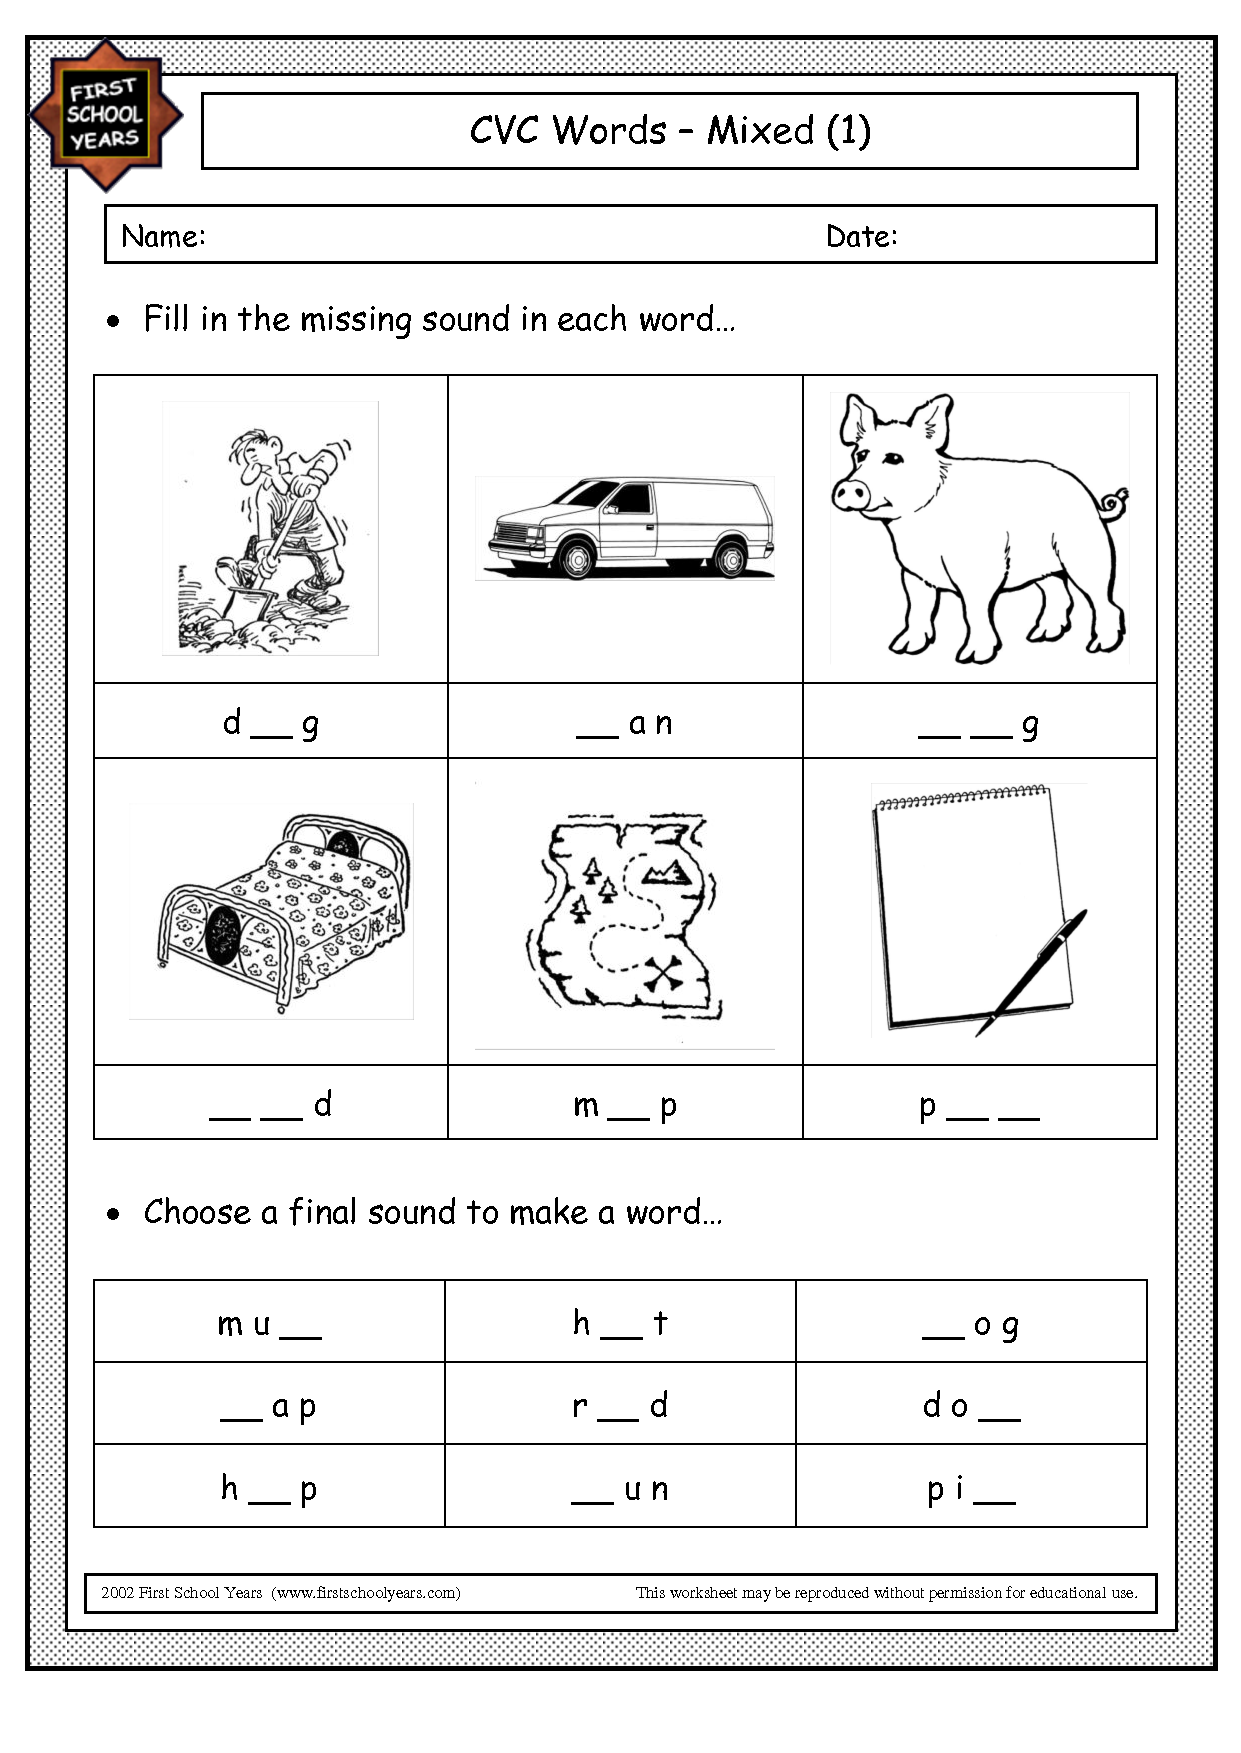 kindergarten-cvc-sentences-worksheets-printable-kindergarten-worksheets